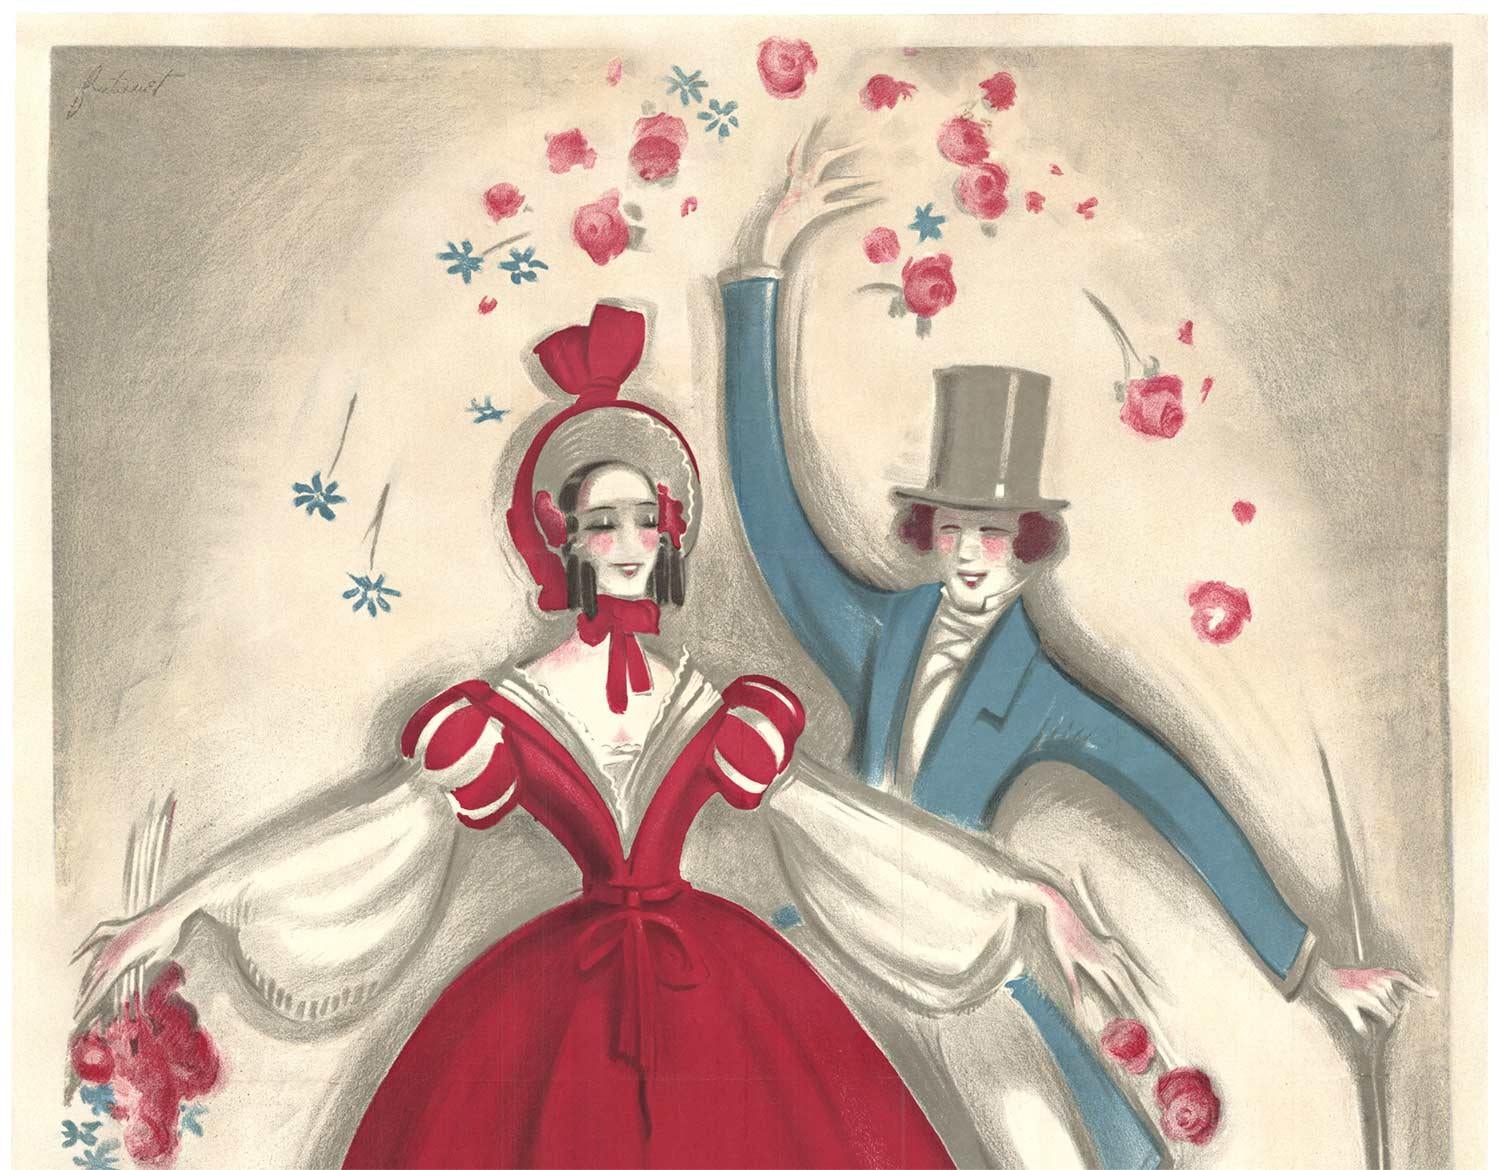 Original Geneva, Festival of Flowers, Geneve, Fete des Fleurs vintage poster - Print by Noel Fontanet